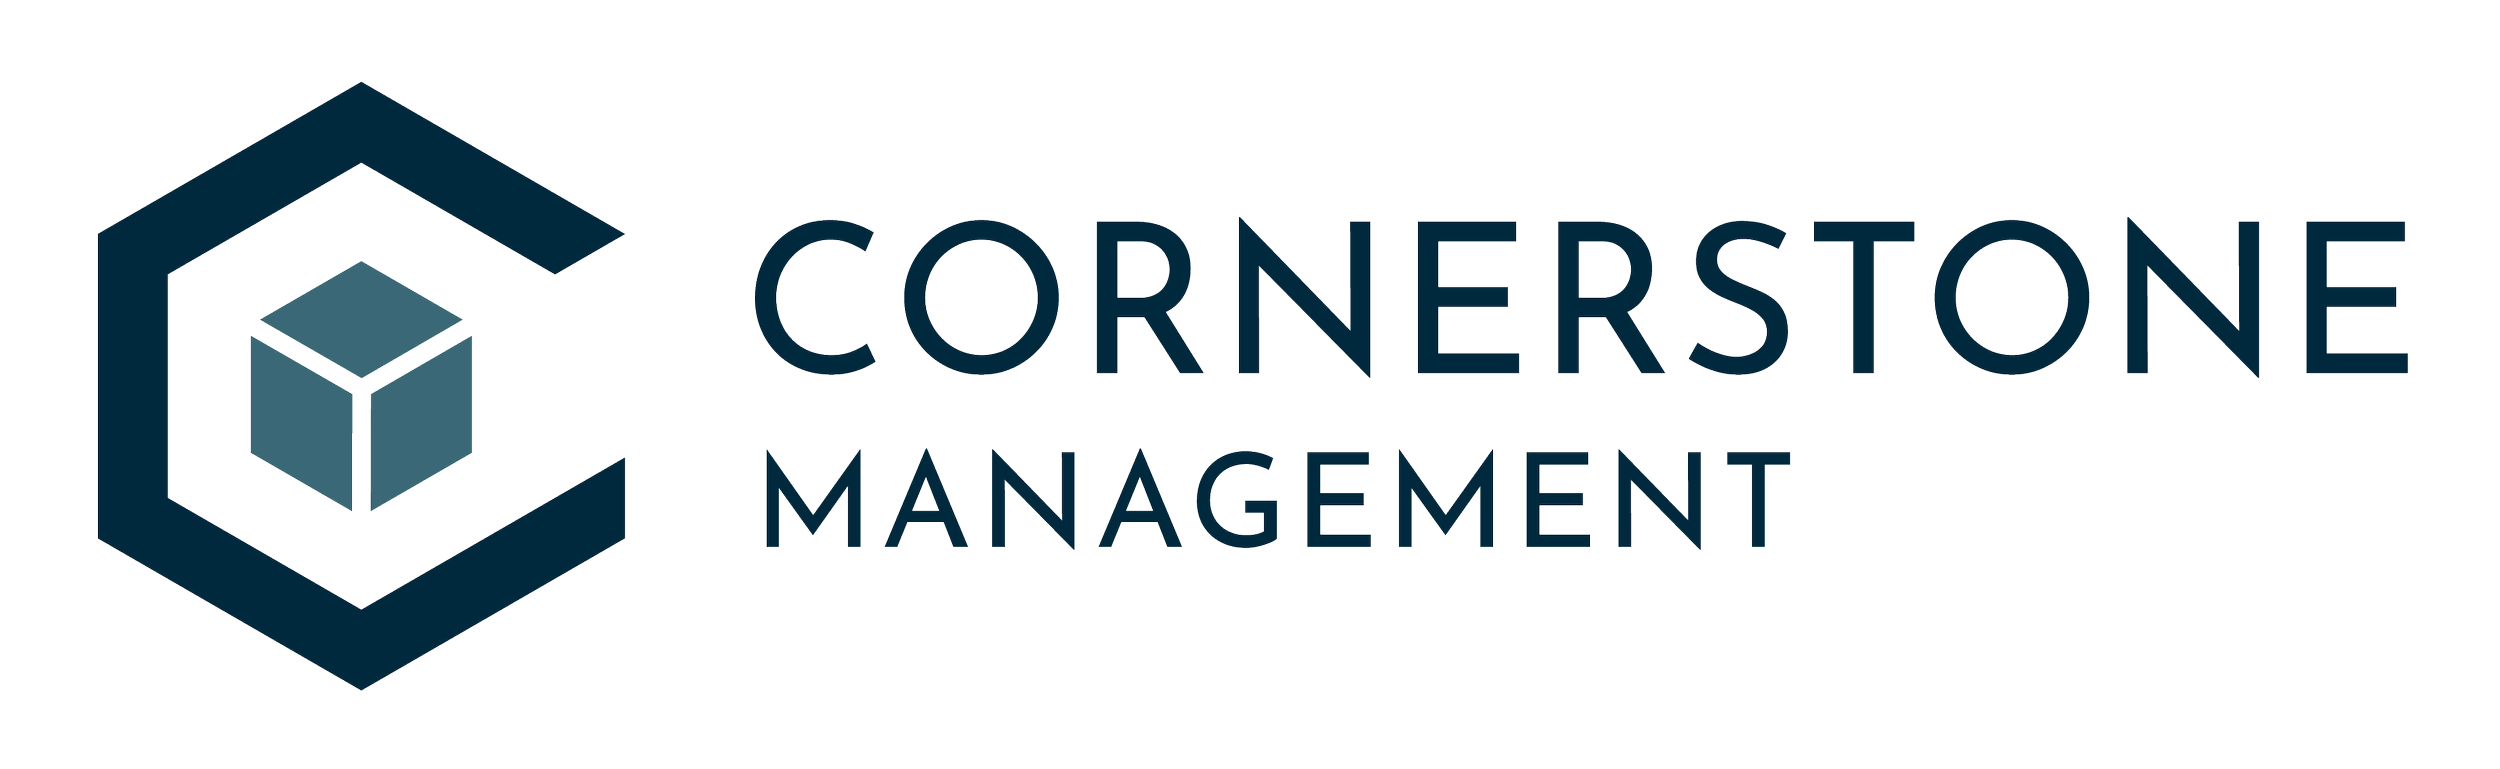 cornerstone-management-logo.png